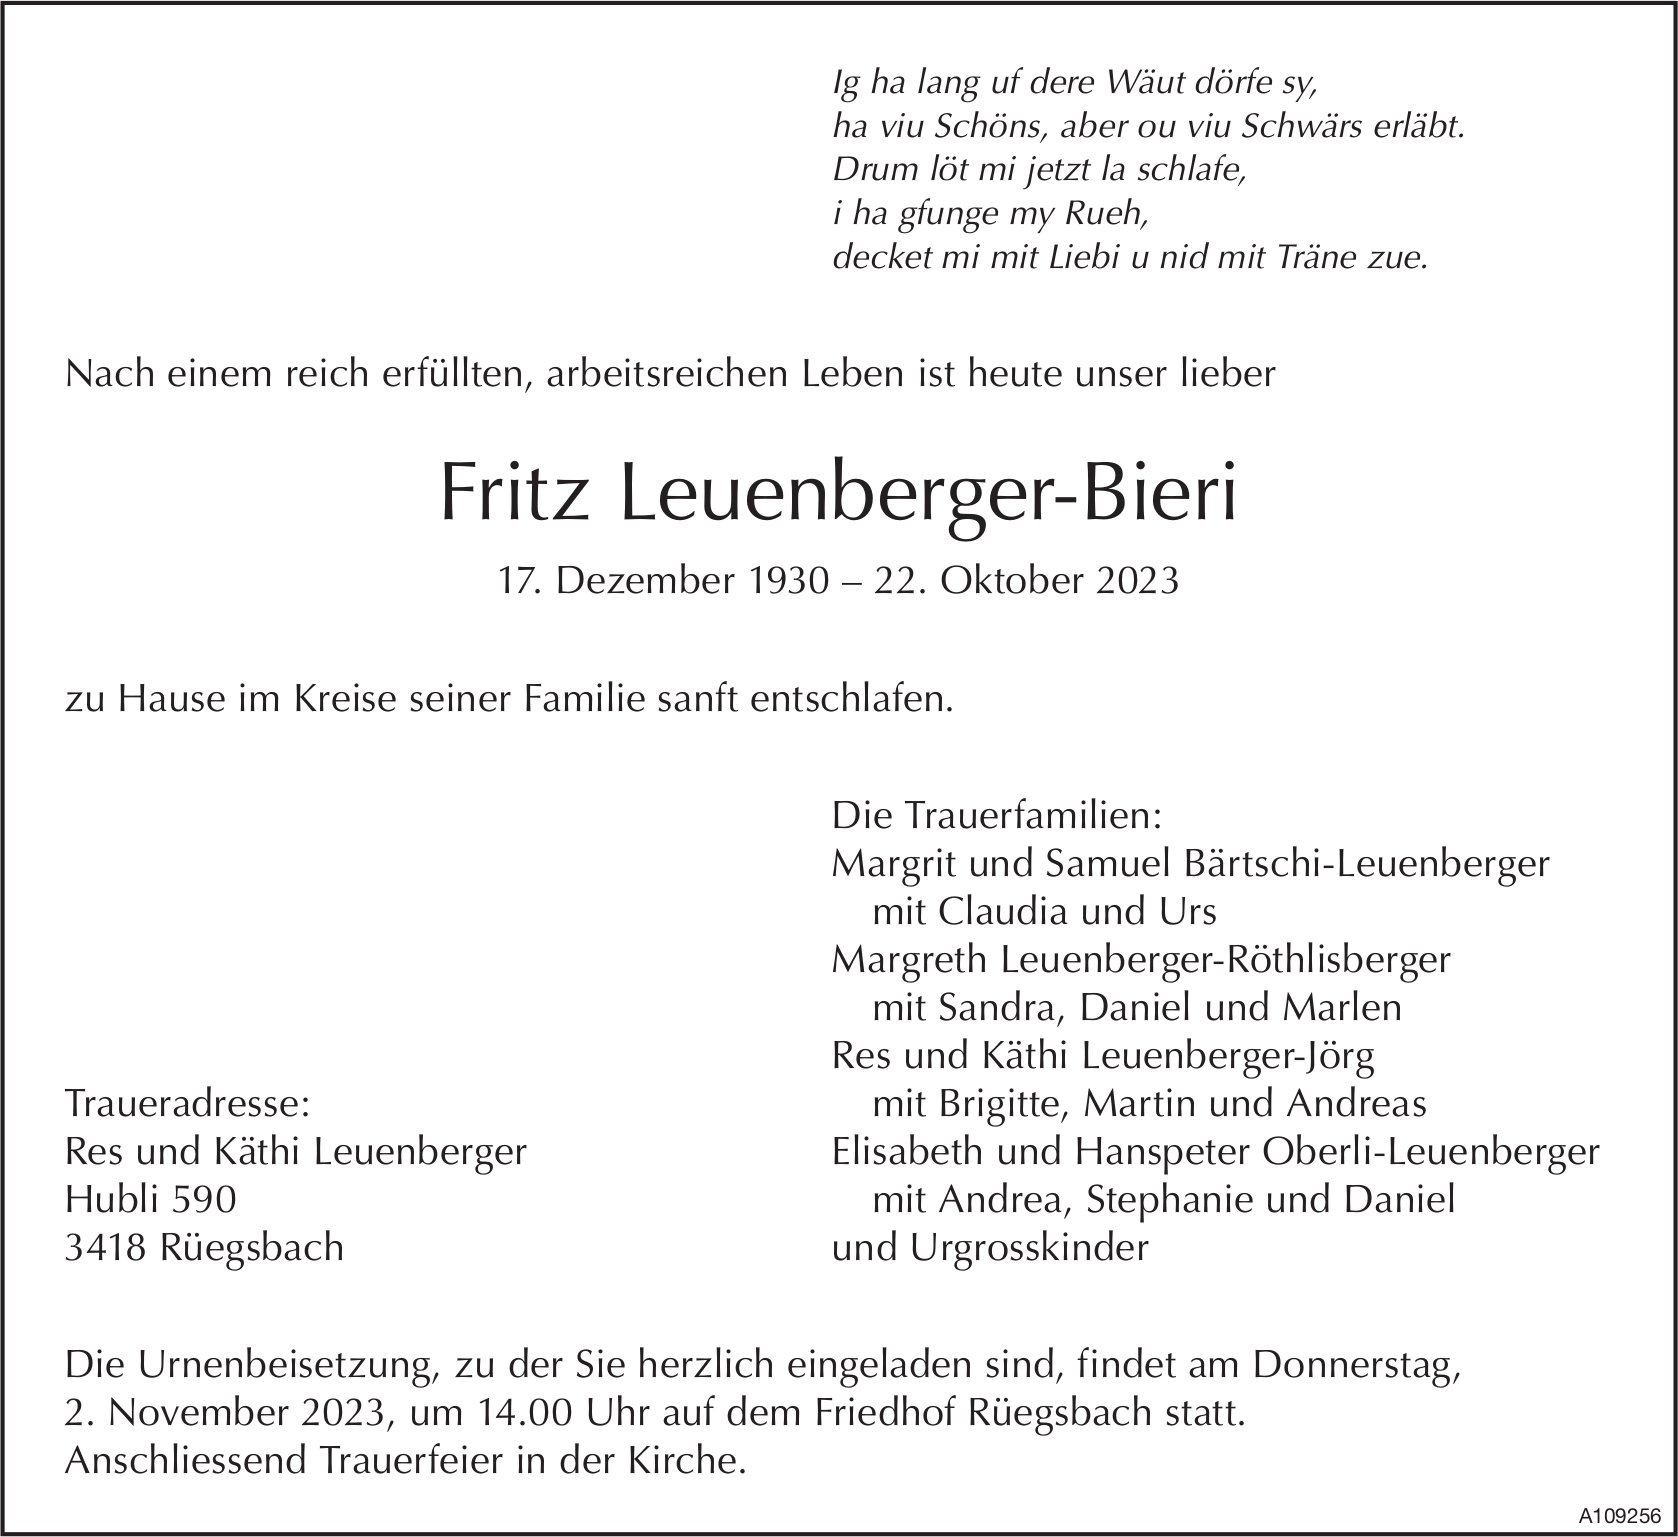 Fritz Leuenberger-Bieri, Oktober 2023 / TA